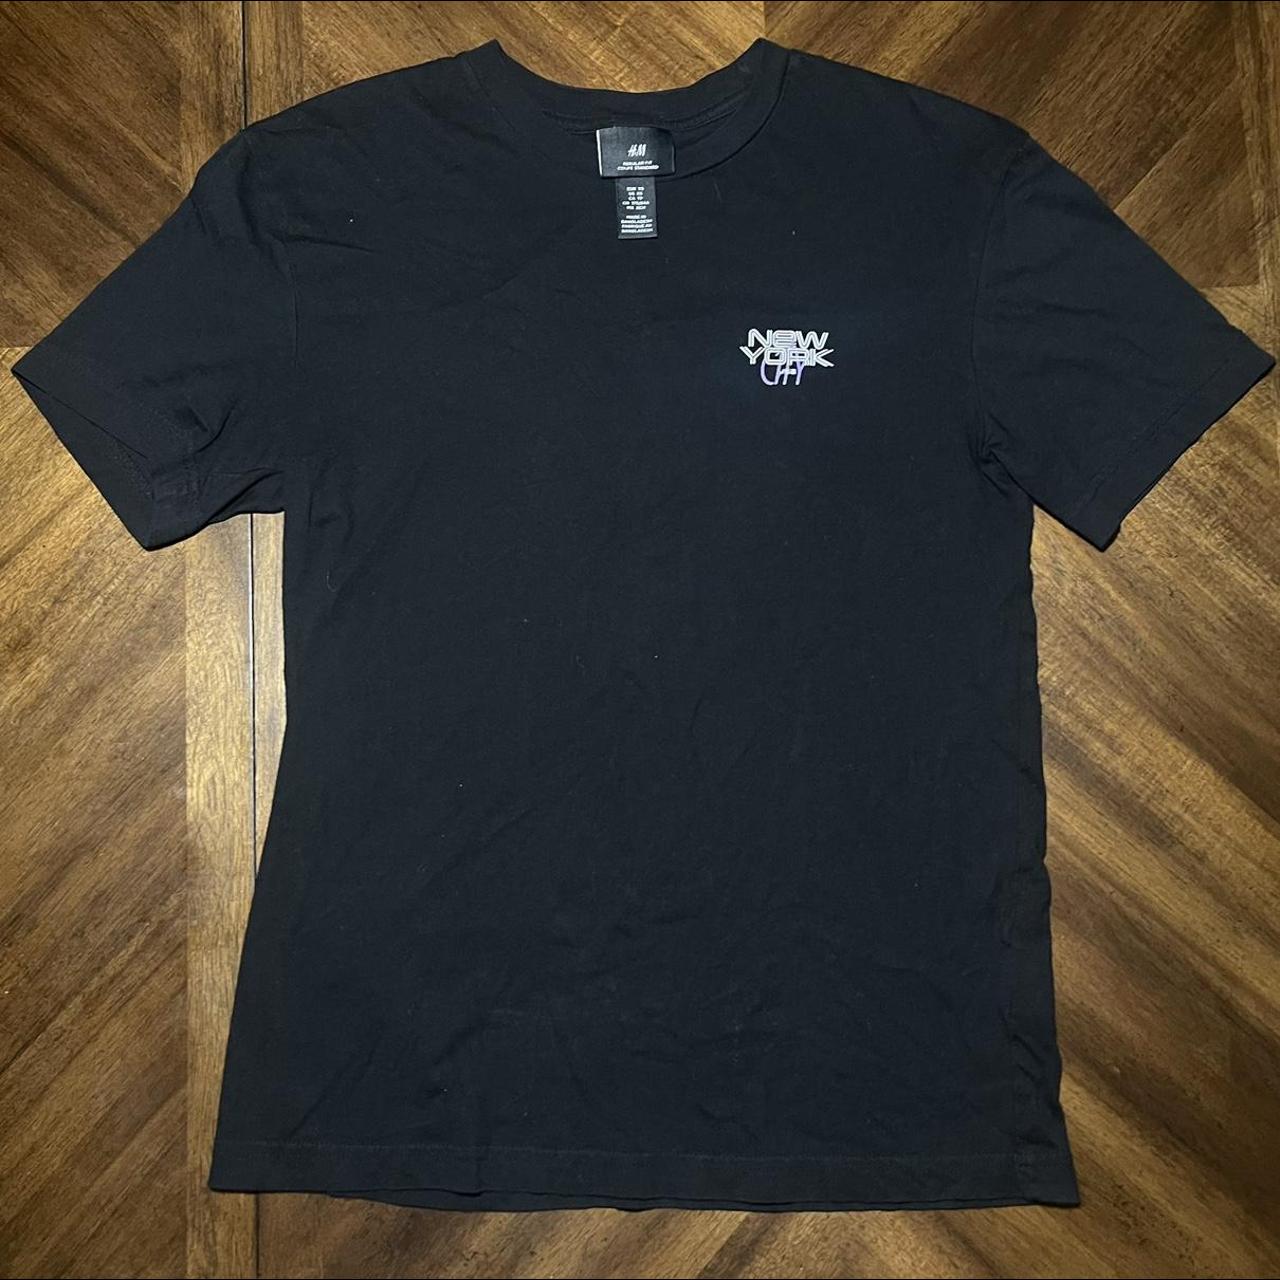 H&M Black New York City Shirt! - willing to - Depop